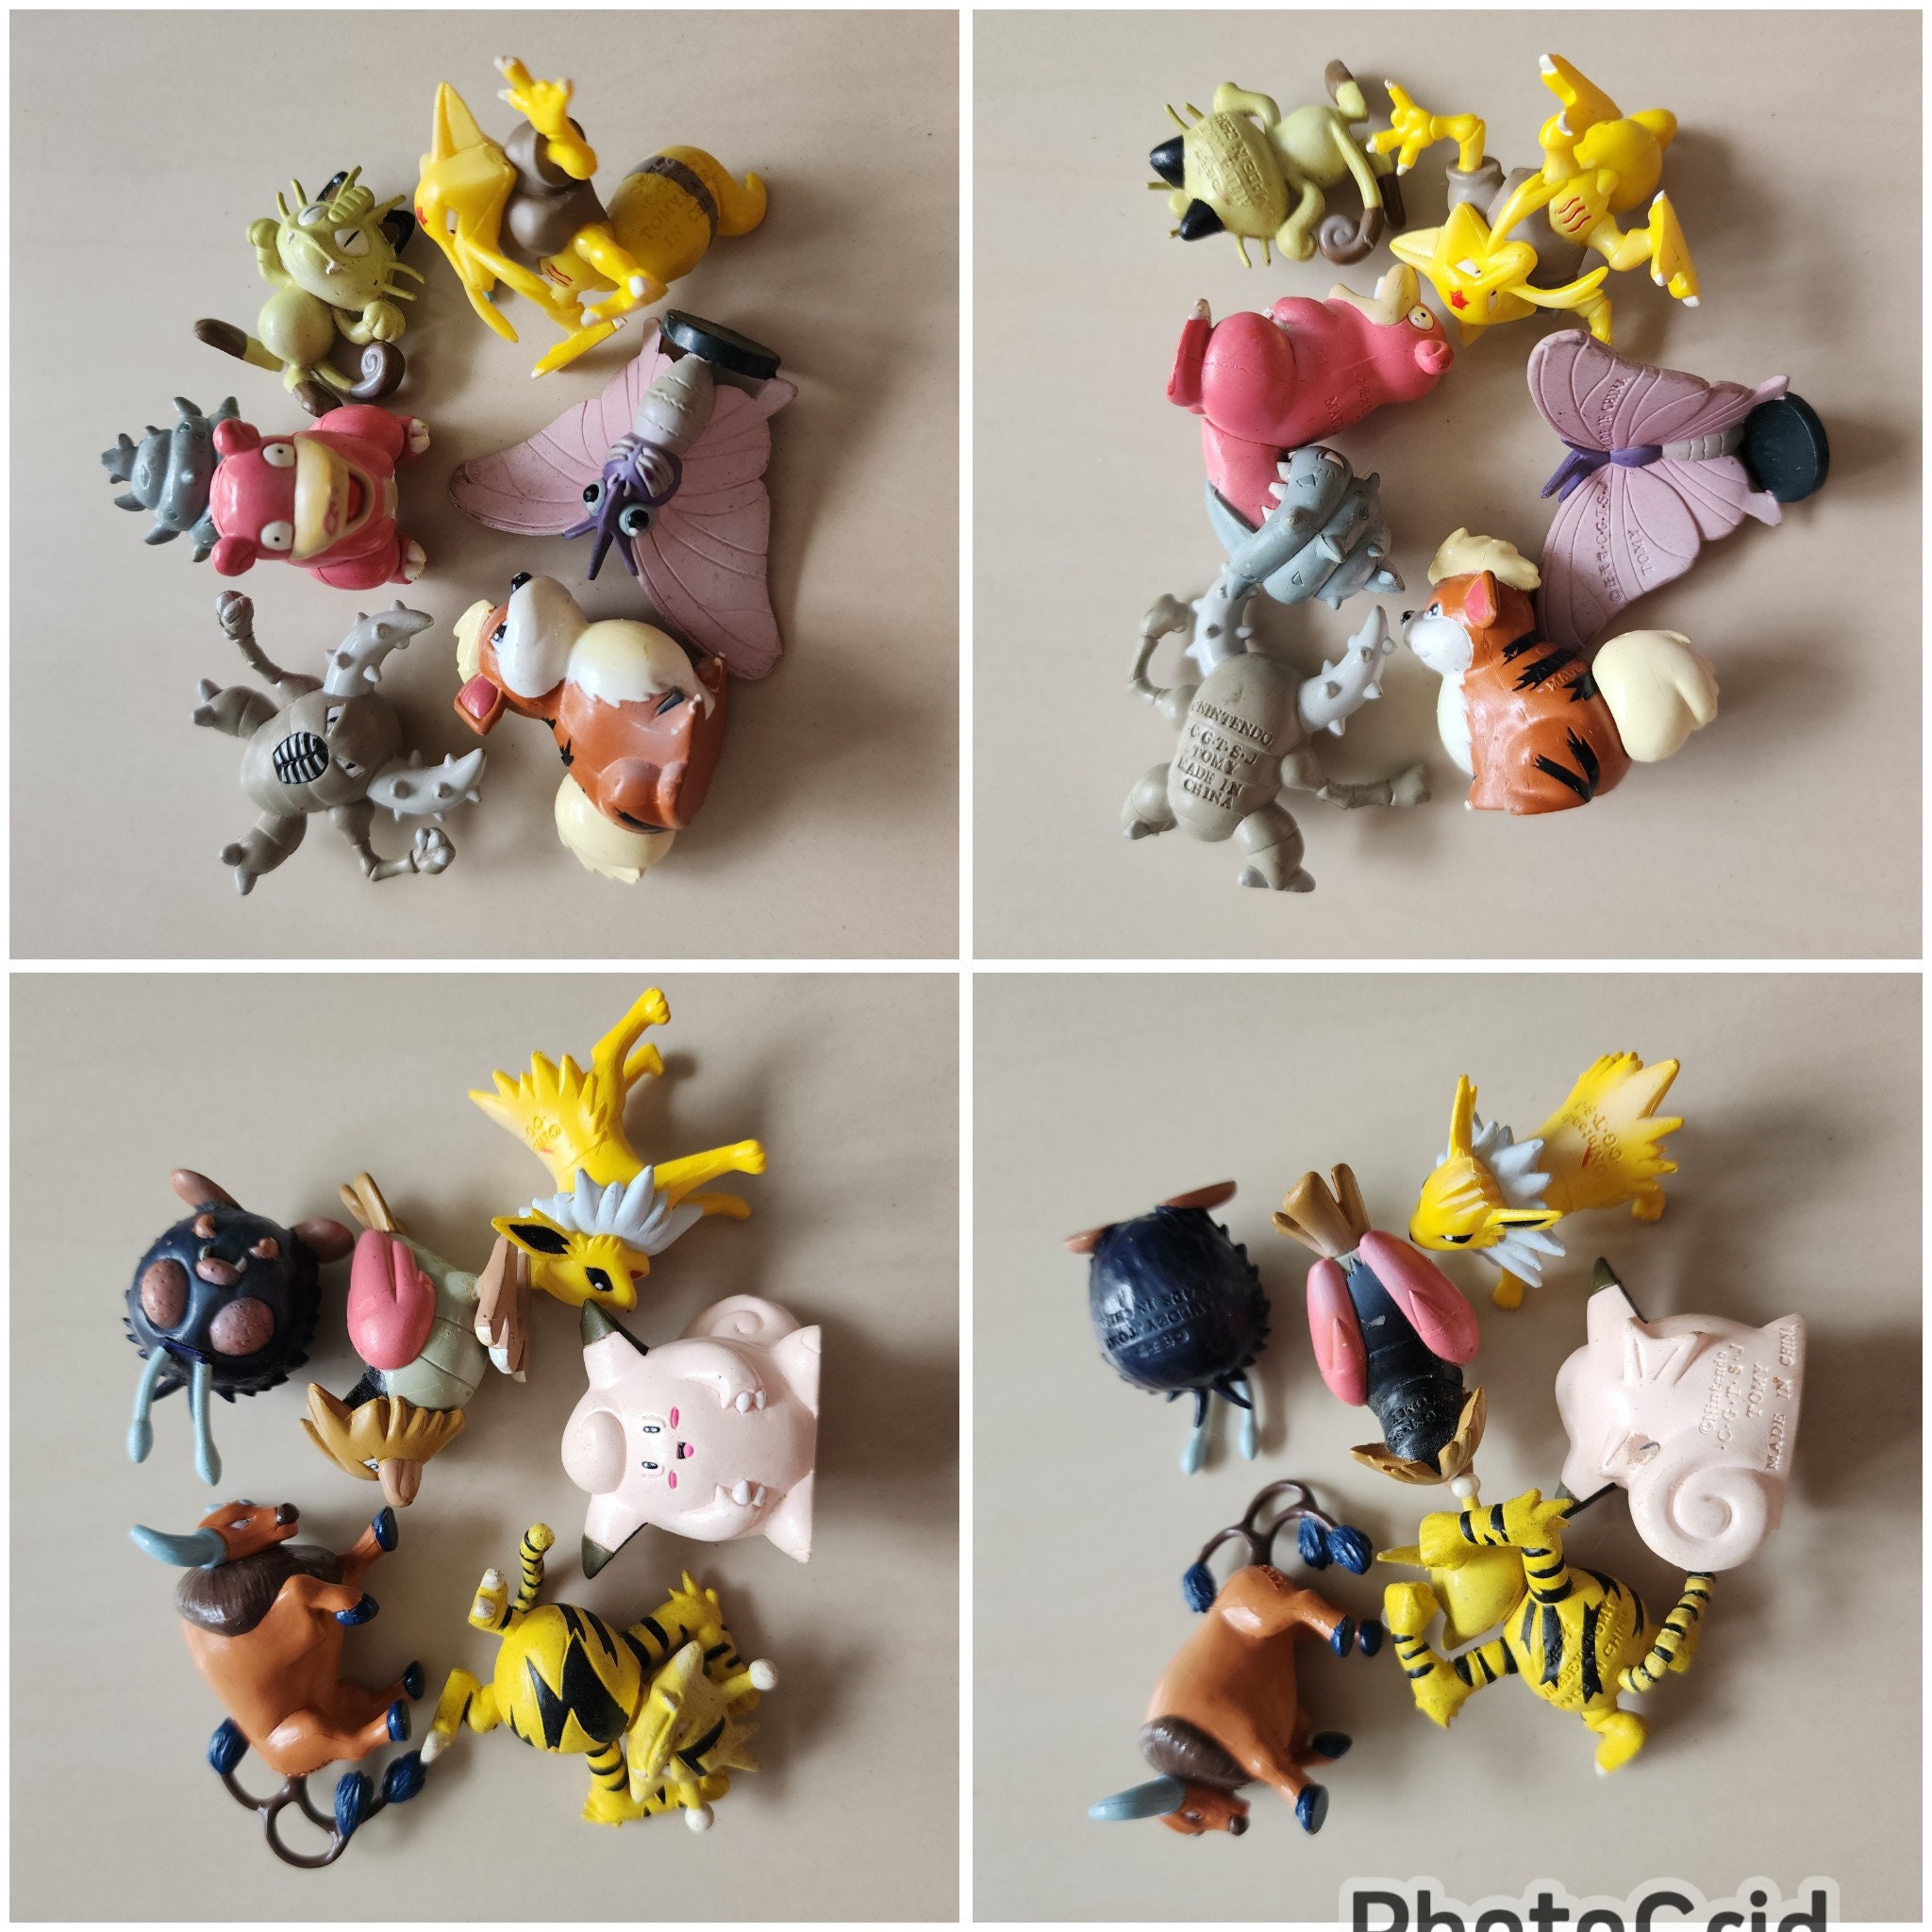 Farfetch'd(Bootleg)Pokemon Monster Nintendo Tomy Collection Figure